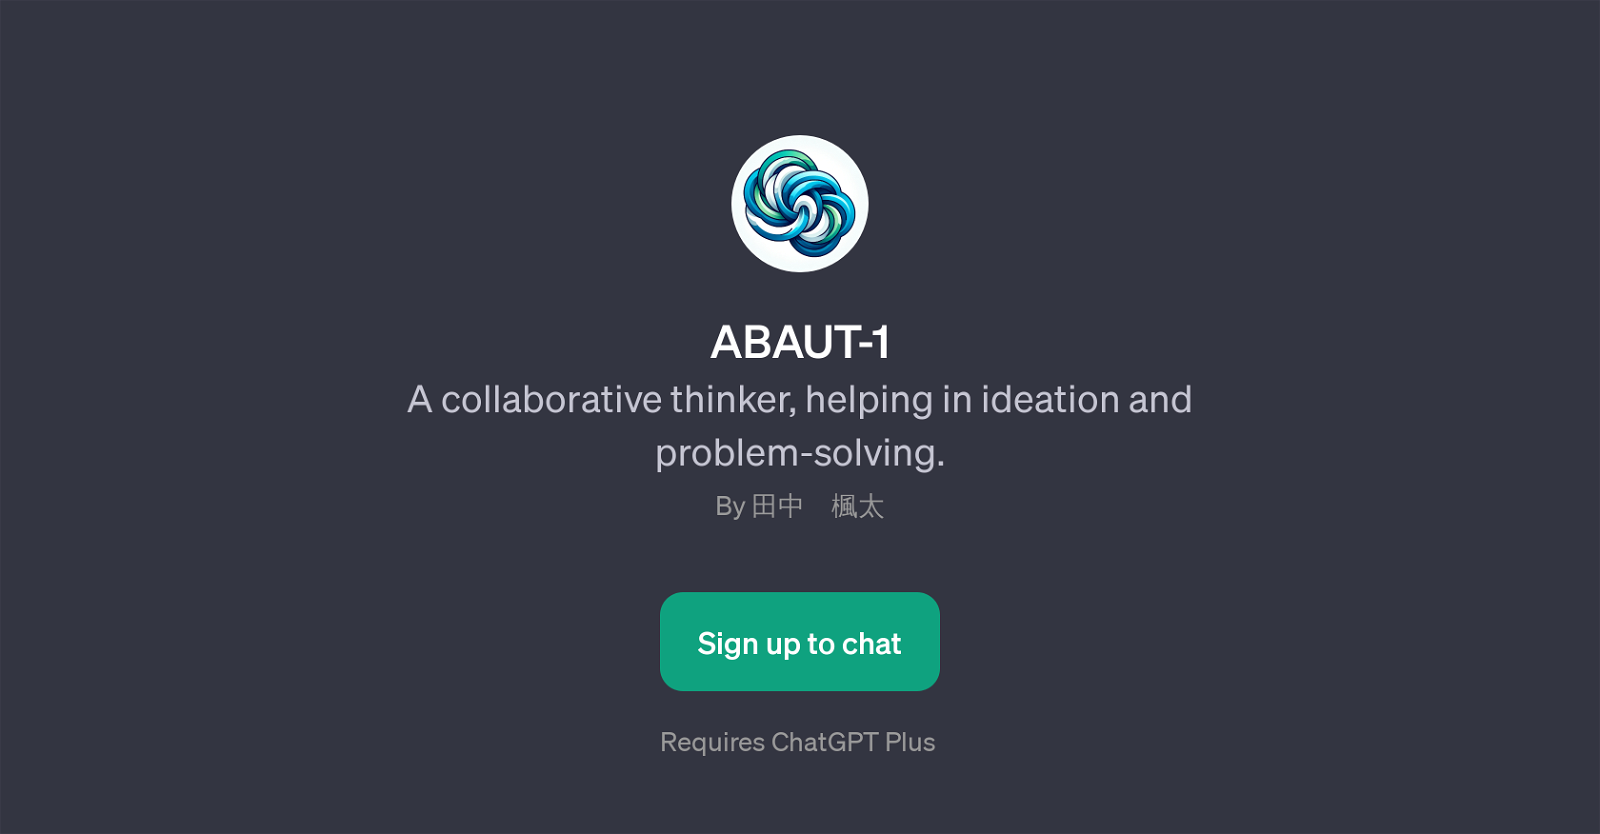 ABAUT-1 website